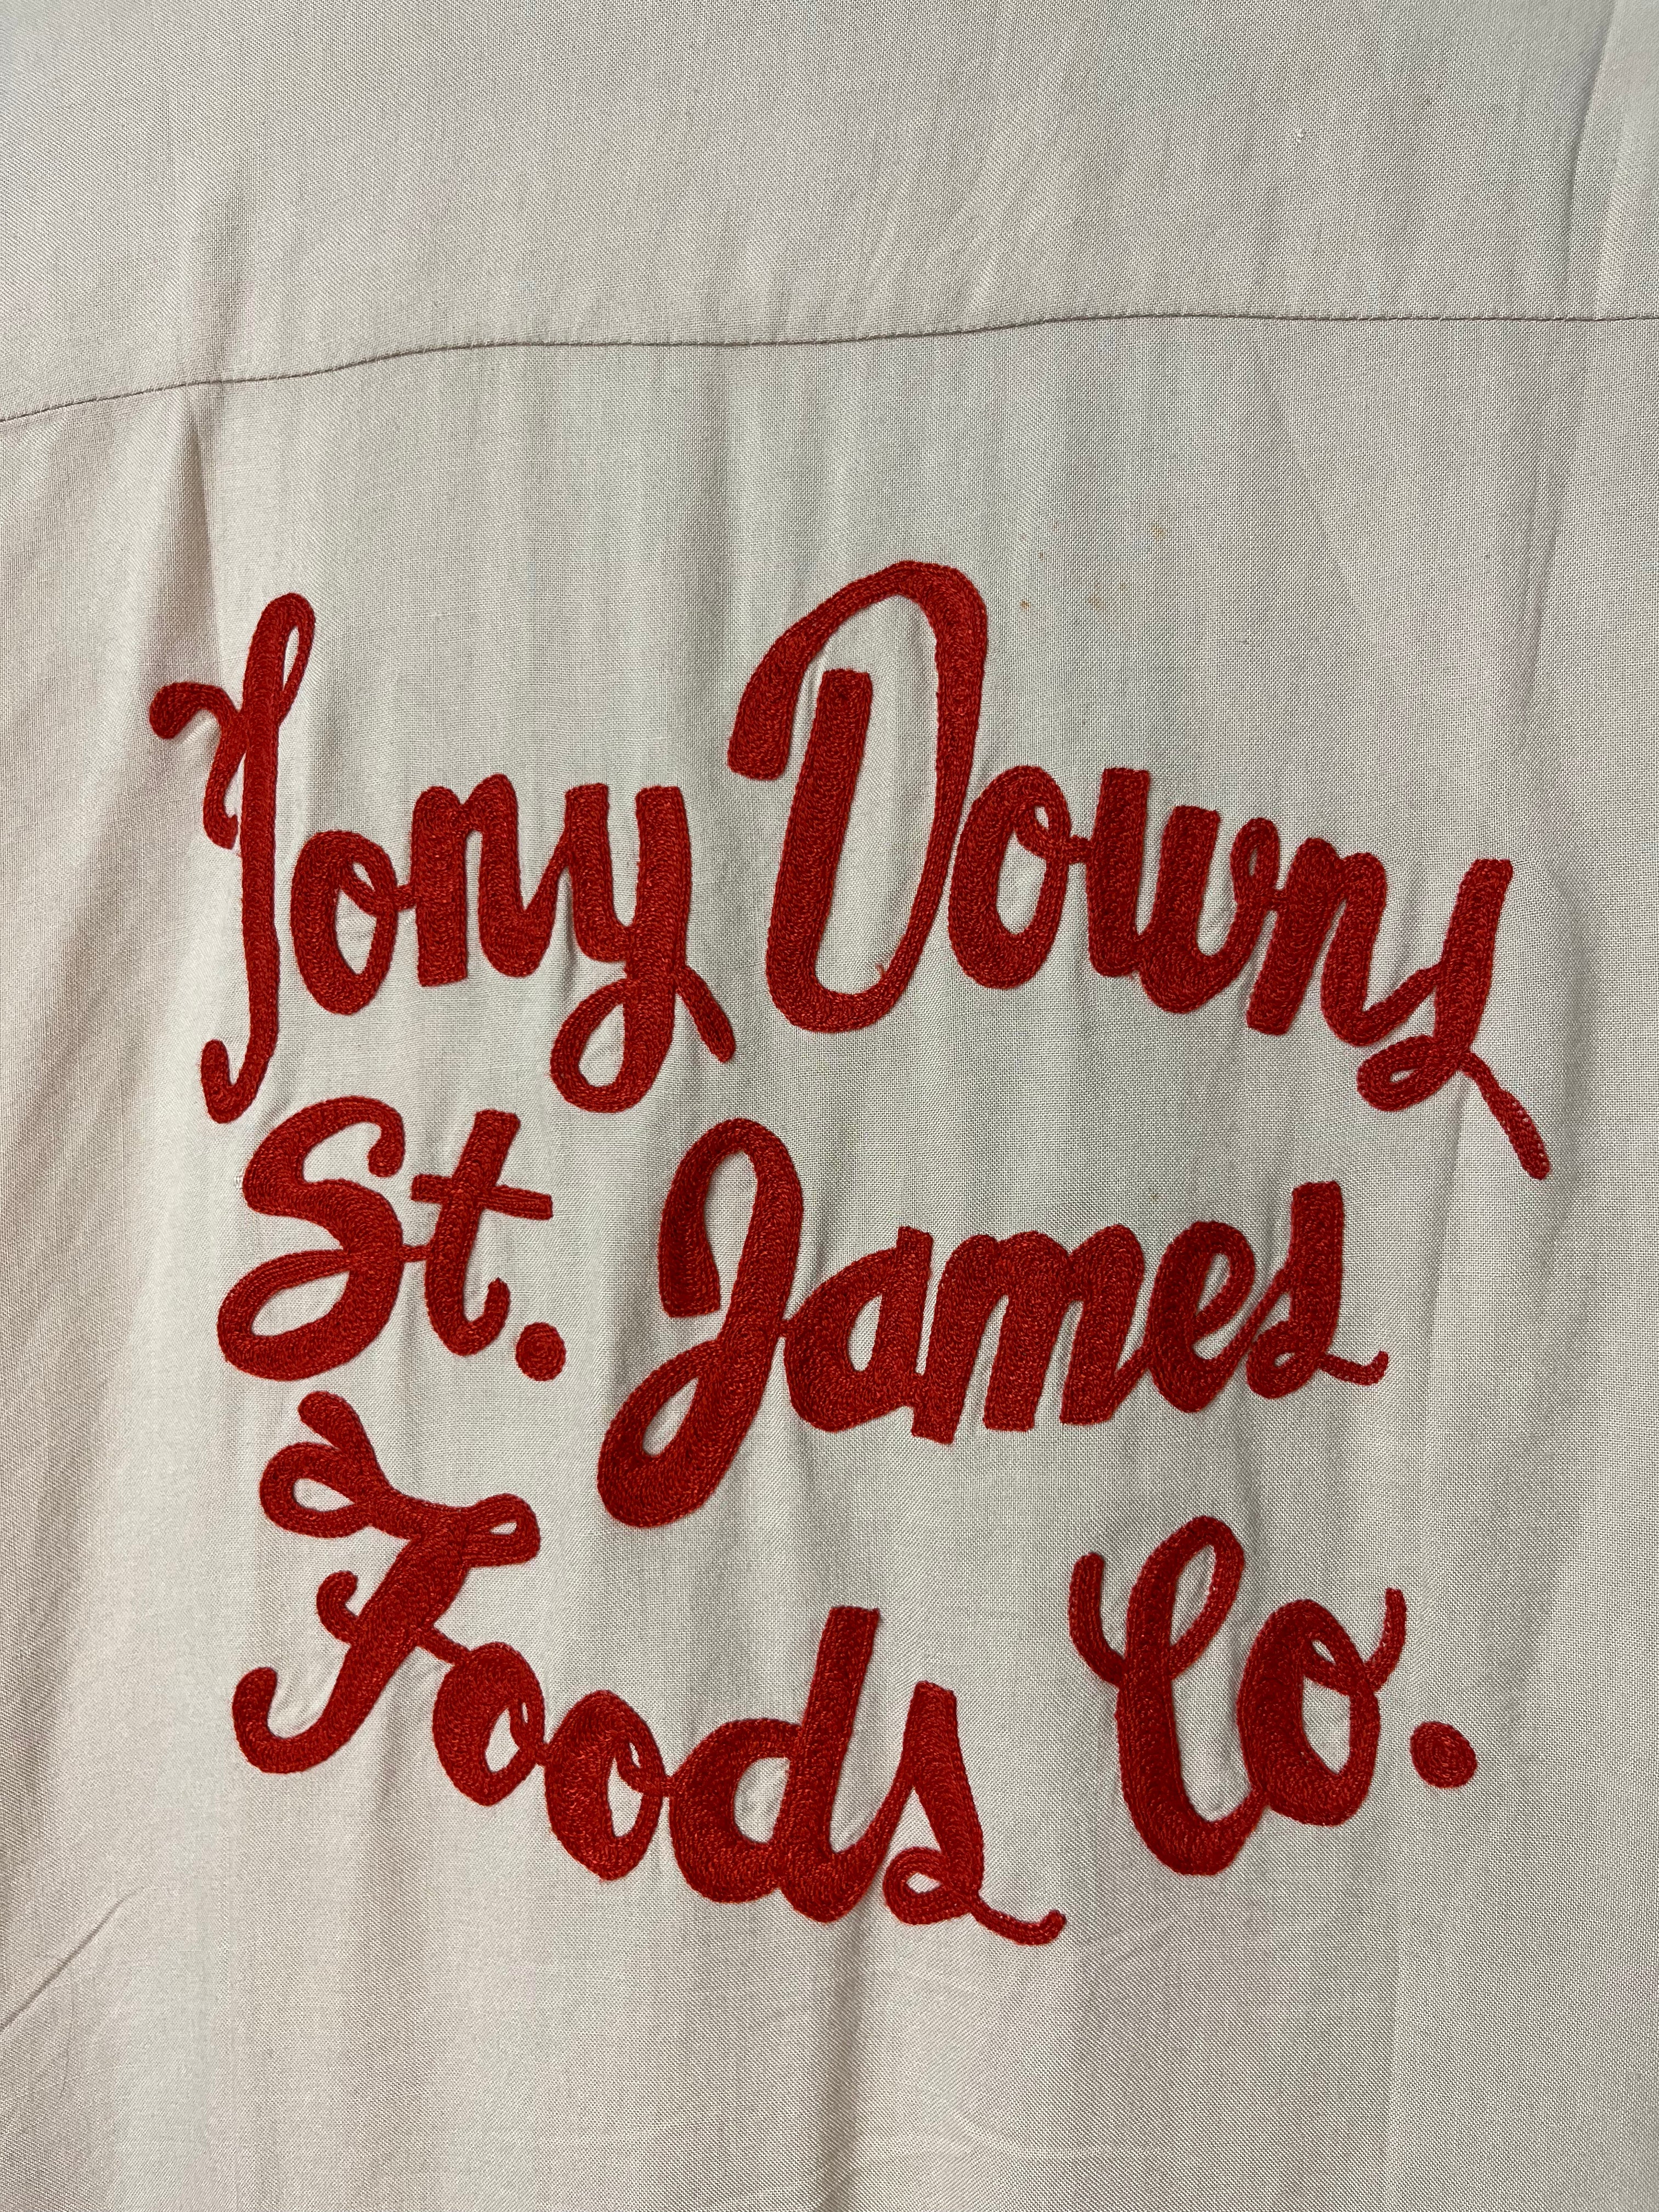 1959-60 Tony Downs Food Co. Loop Collar Bowling Shirt Houston Brand - Sand/Scarlet - M